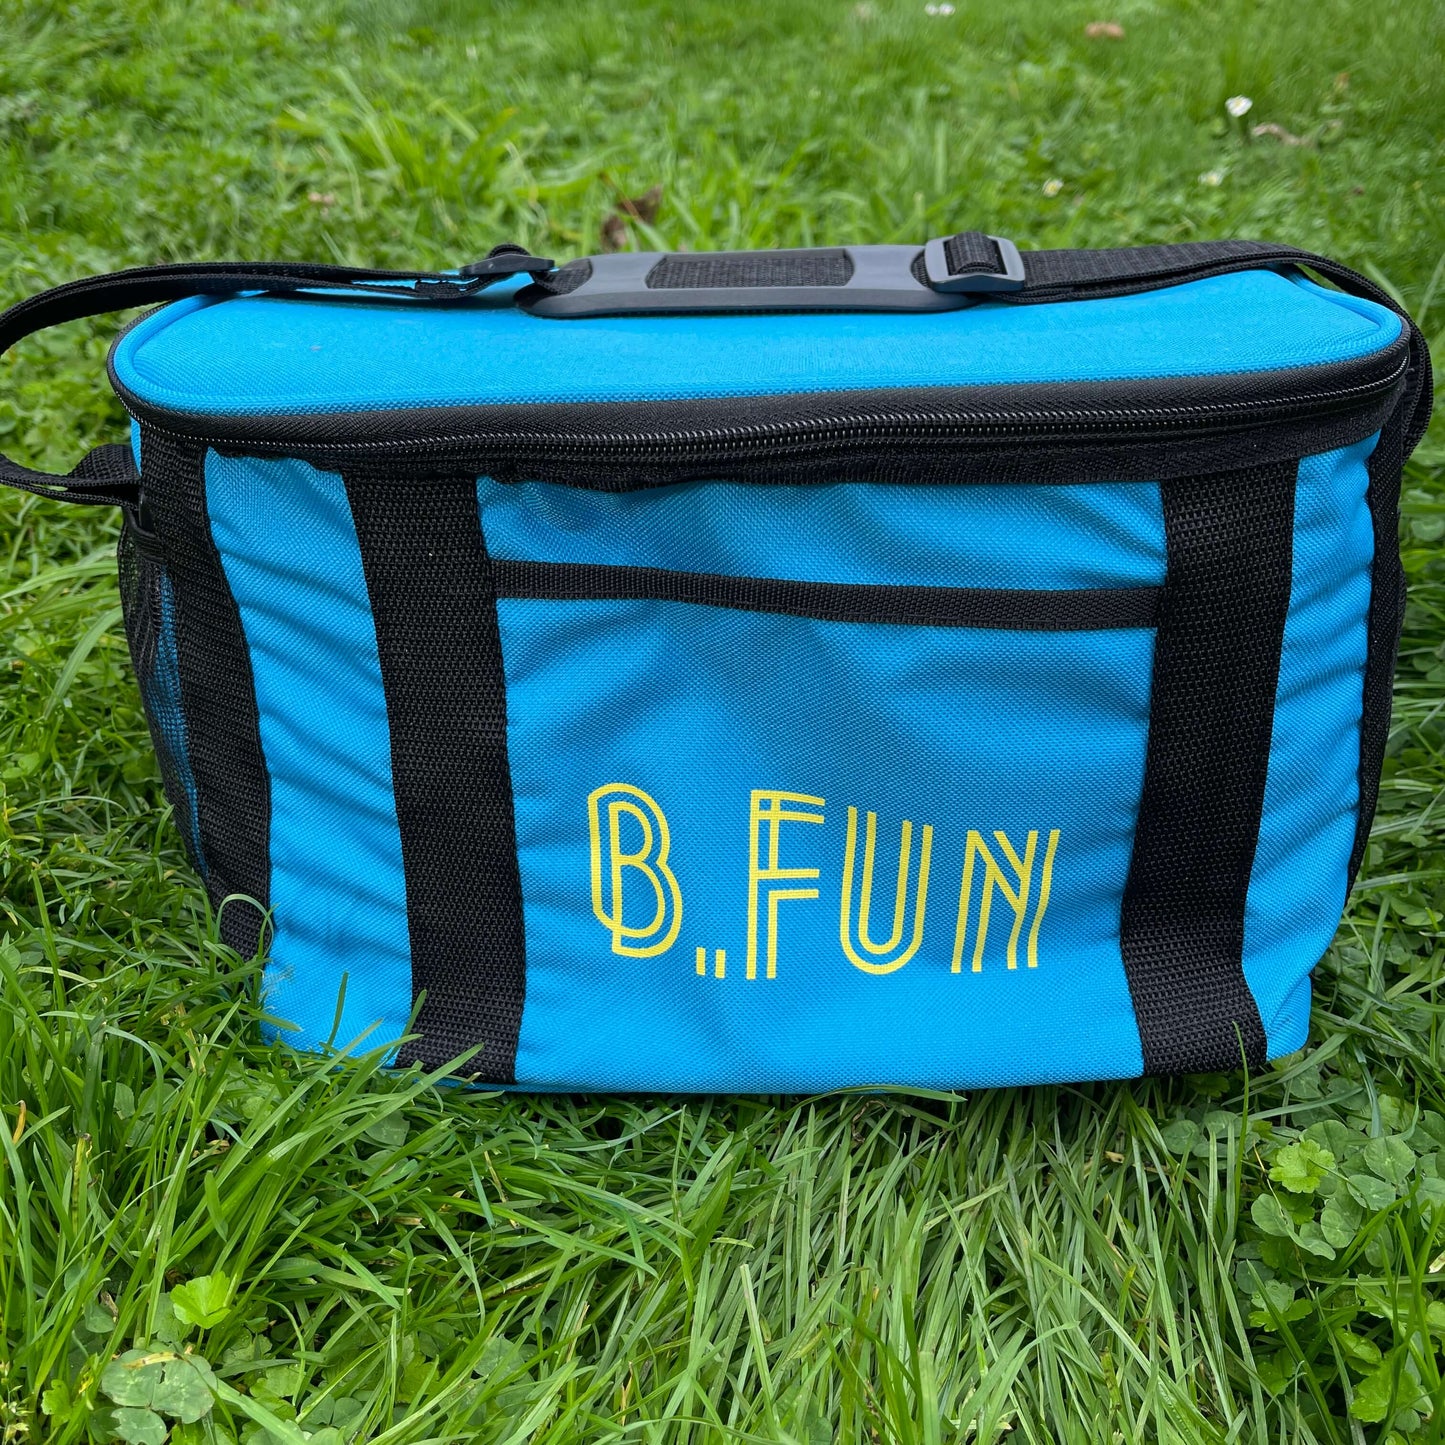 B FUN Large Cooler Bag - Teal Blue with the fun yellow LOGO